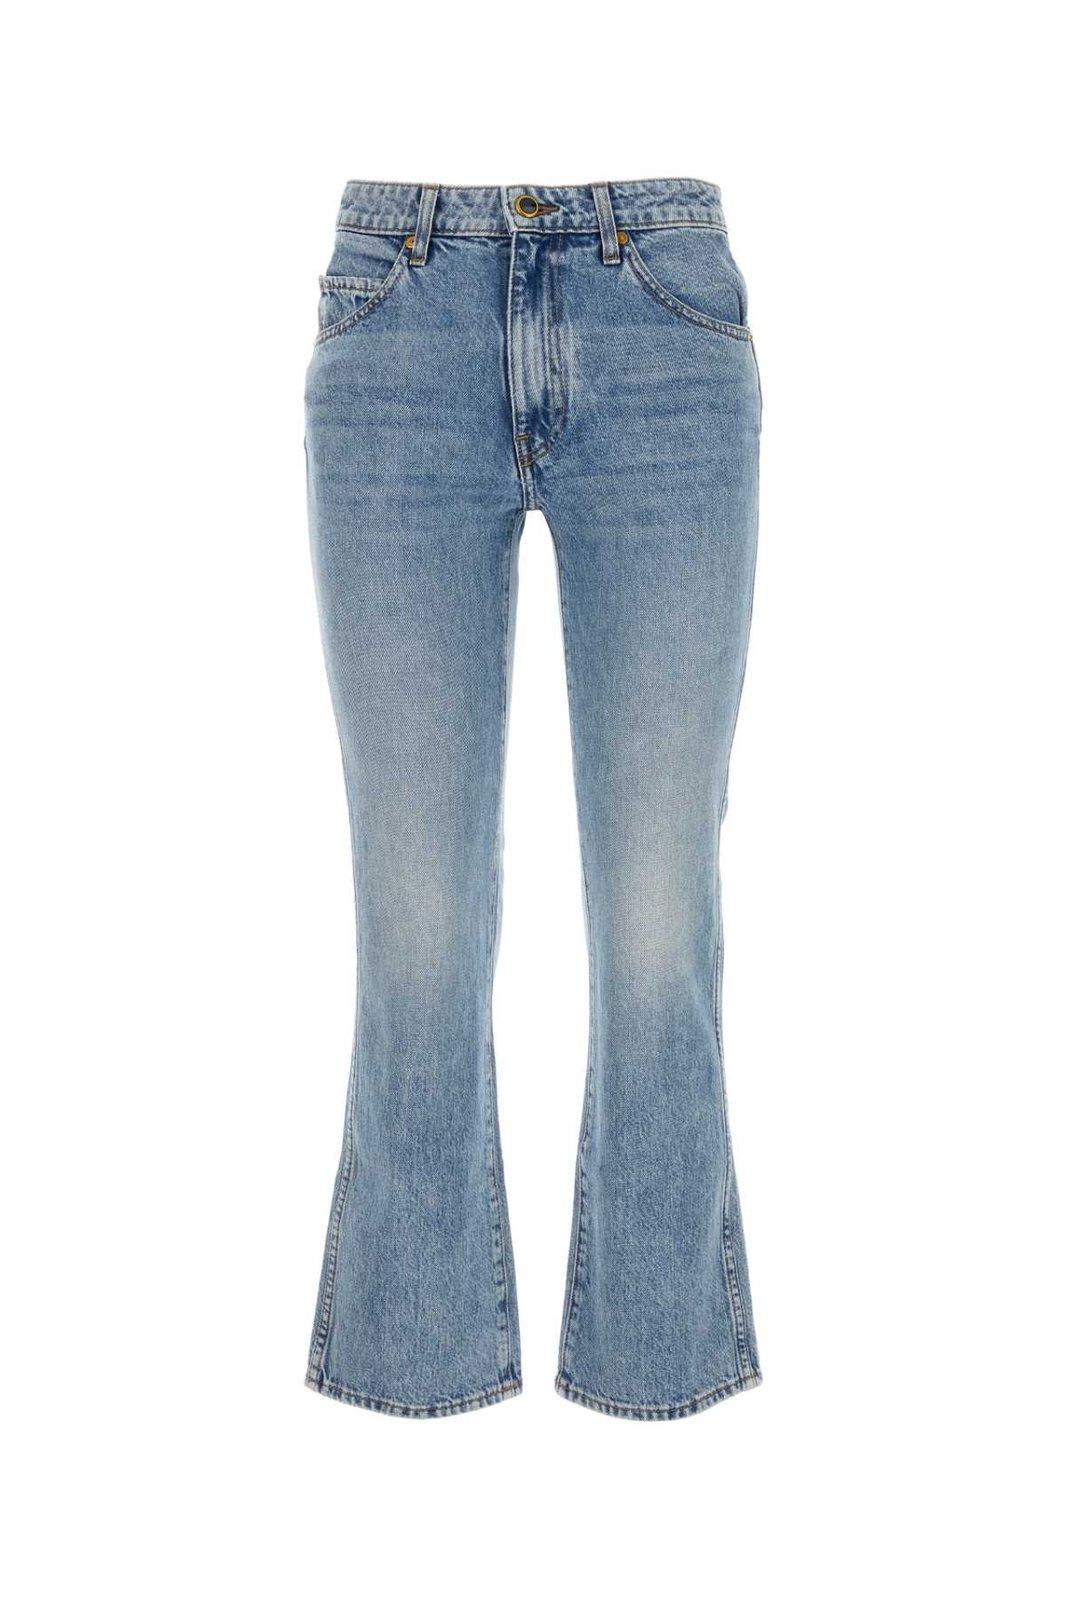 The Vivian High Waisted Bootcut Jeans